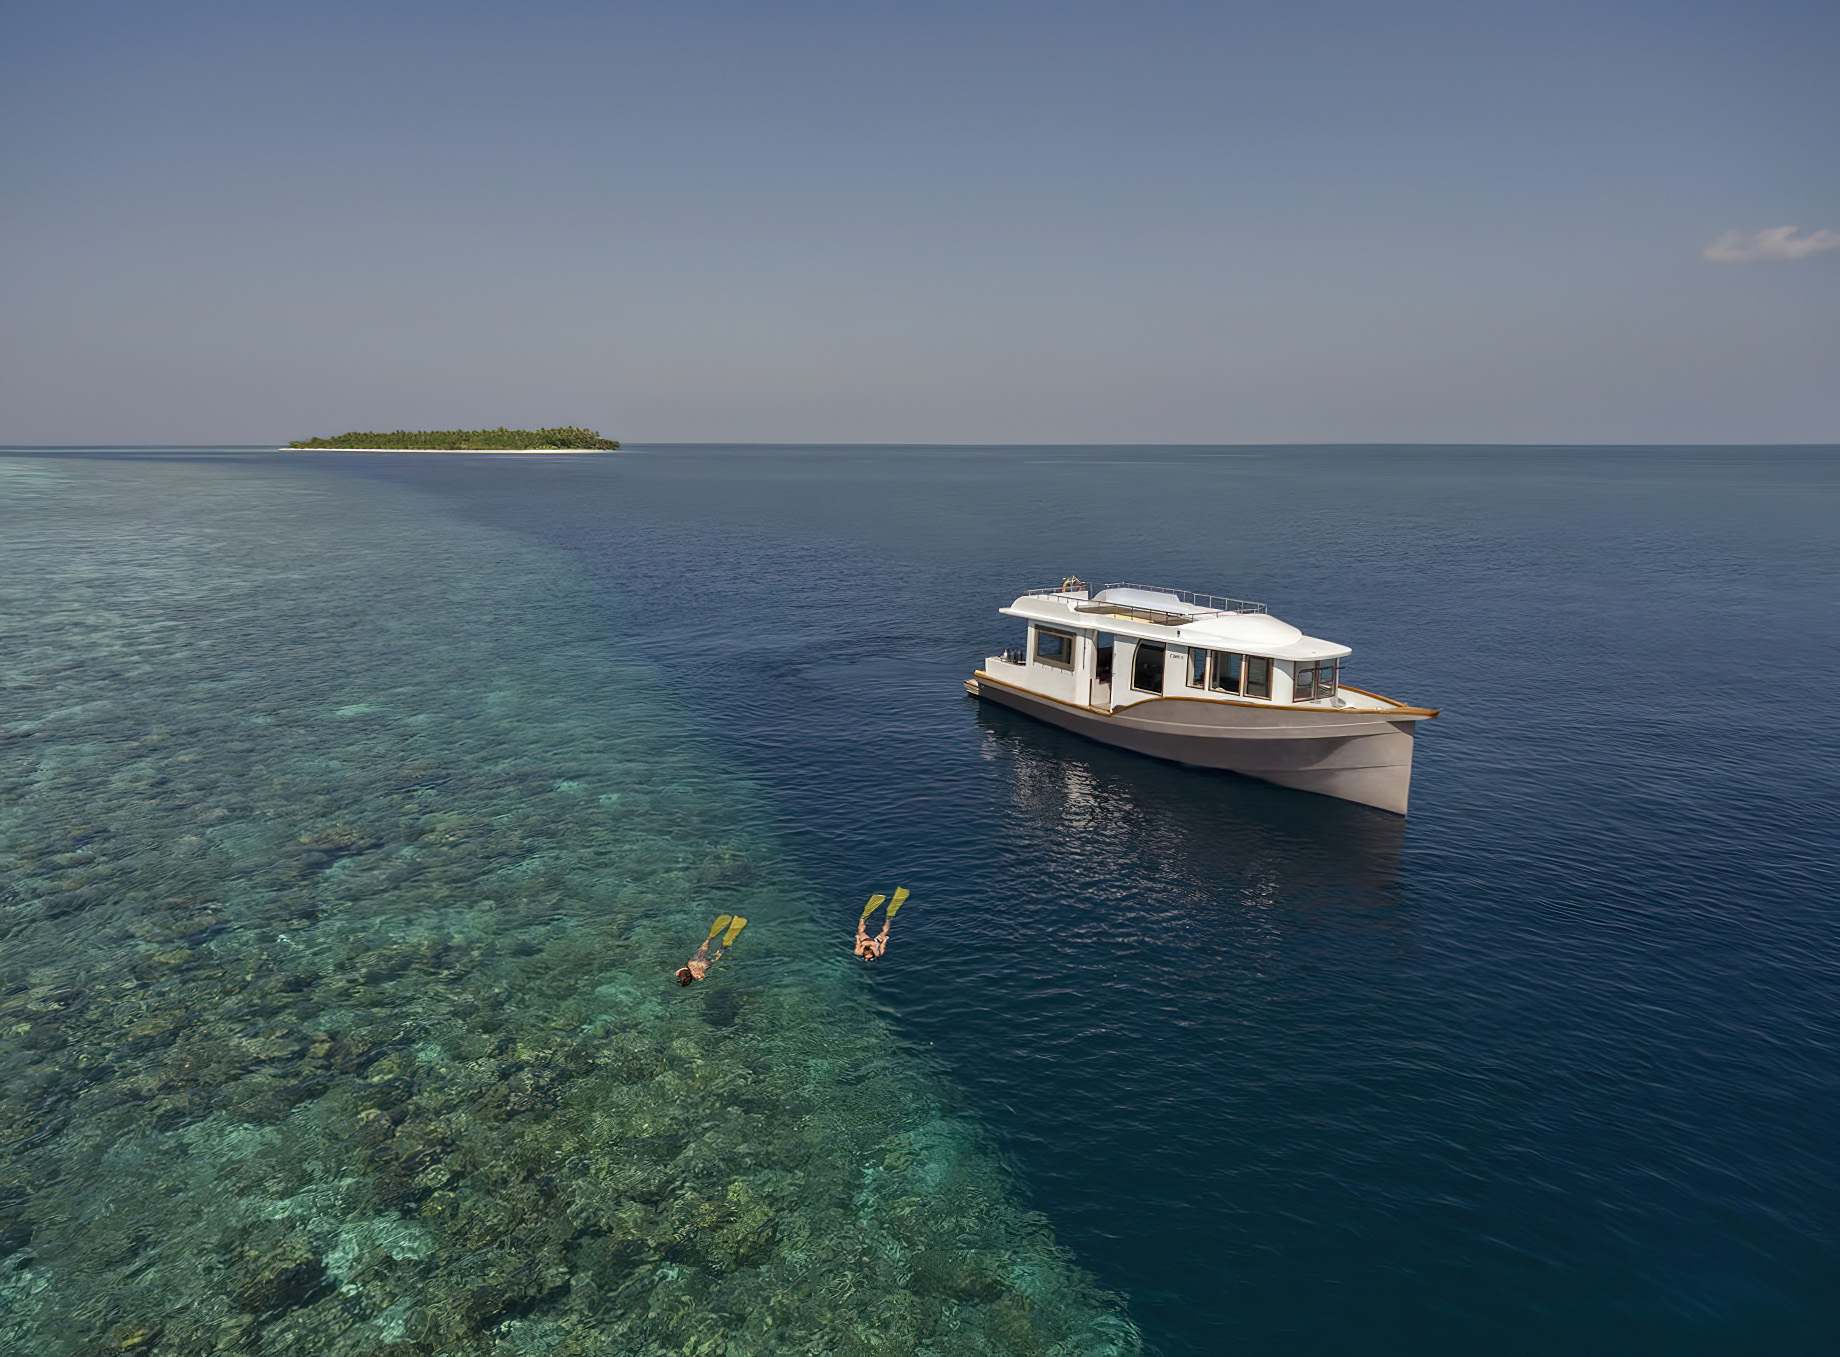 Cheval Blanc Randheli Resort - Noonu Atoll, Maldives - Snorkeling Aerial